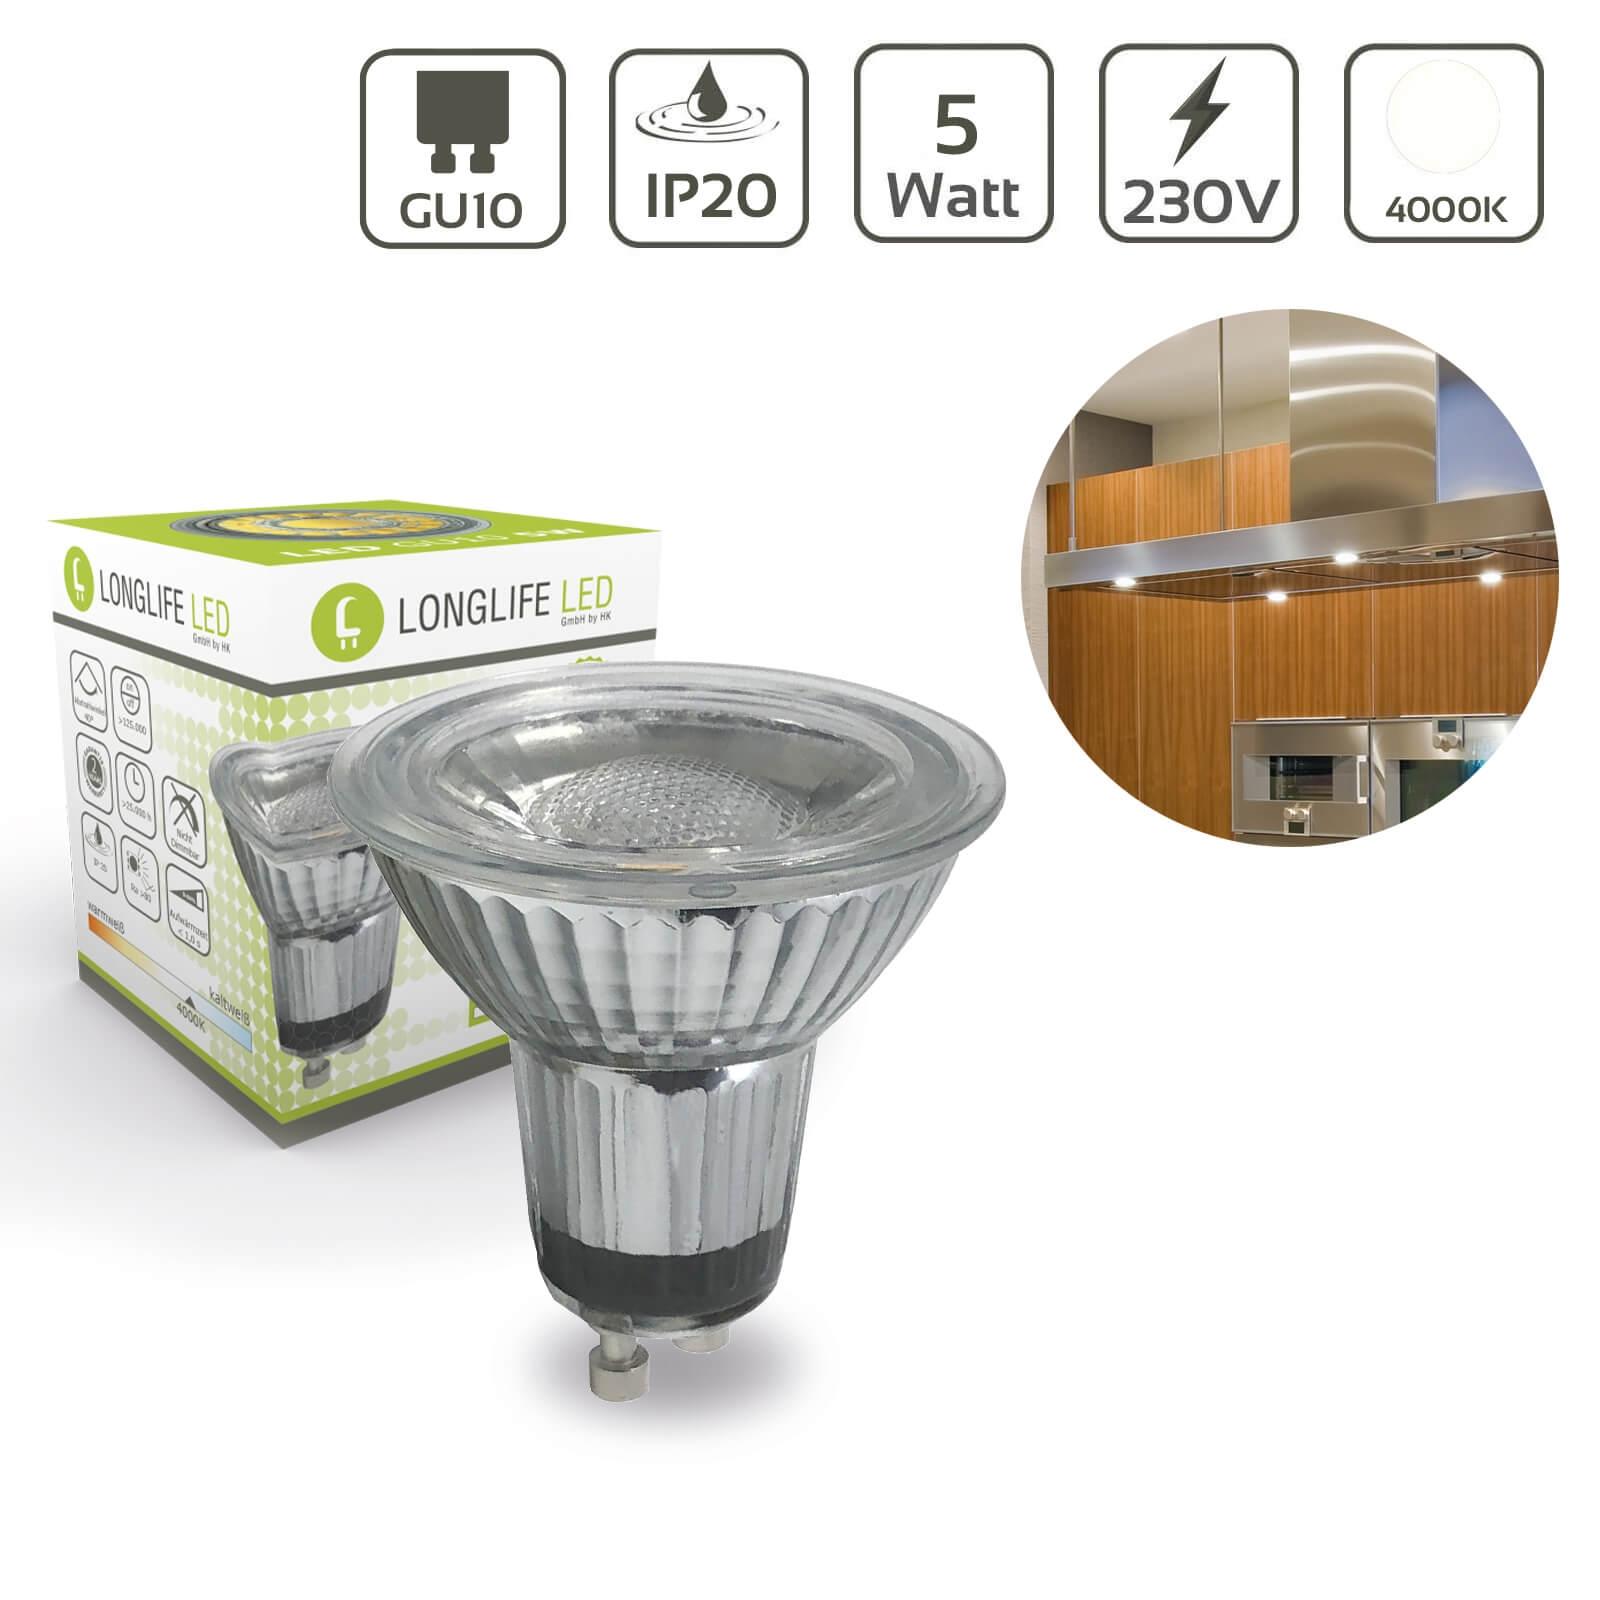 LED Strahler Spot 5W 12V E27 (Warmweiss) für Solaranlage günstig